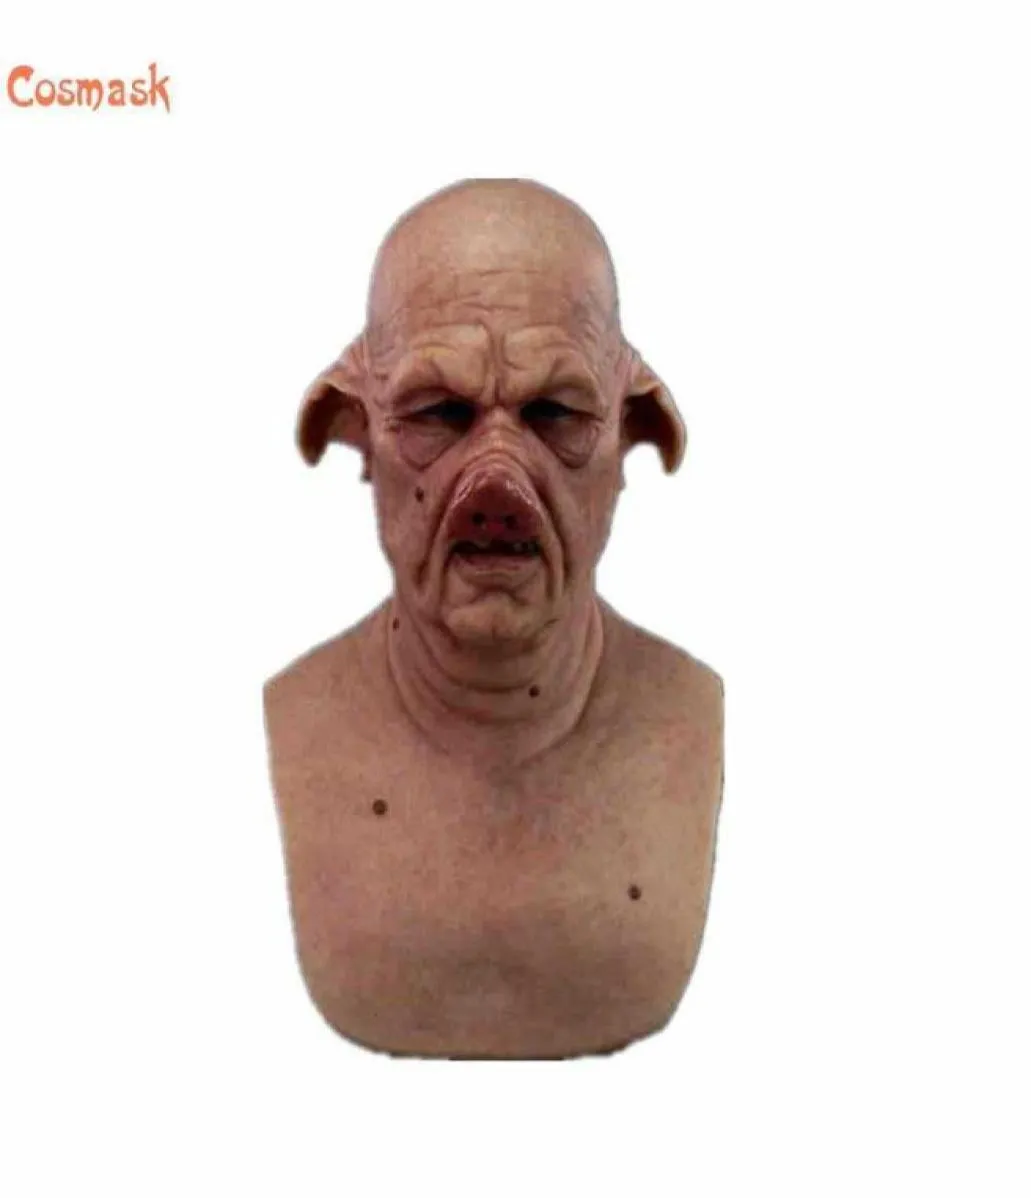 Cosmaske Scary Pig Head Maske Halloween Latex Animal Requisiten Dunkelreihe G09108546380